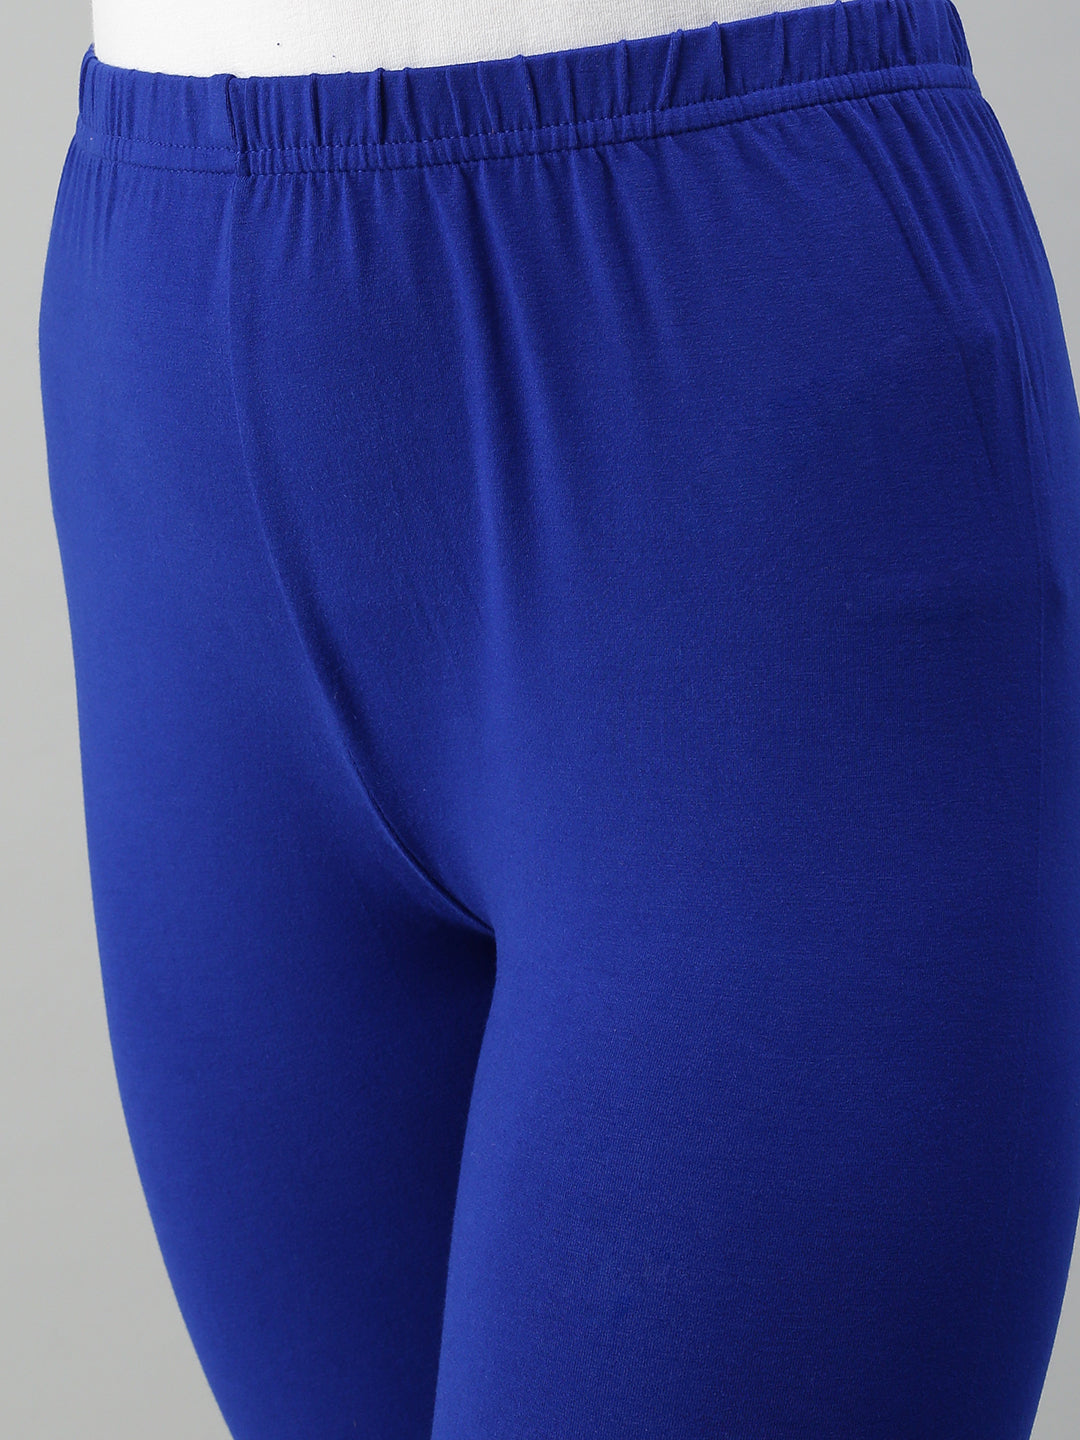 Buy Royal Blue Leggings for Women by LGC Online | Ajio.com